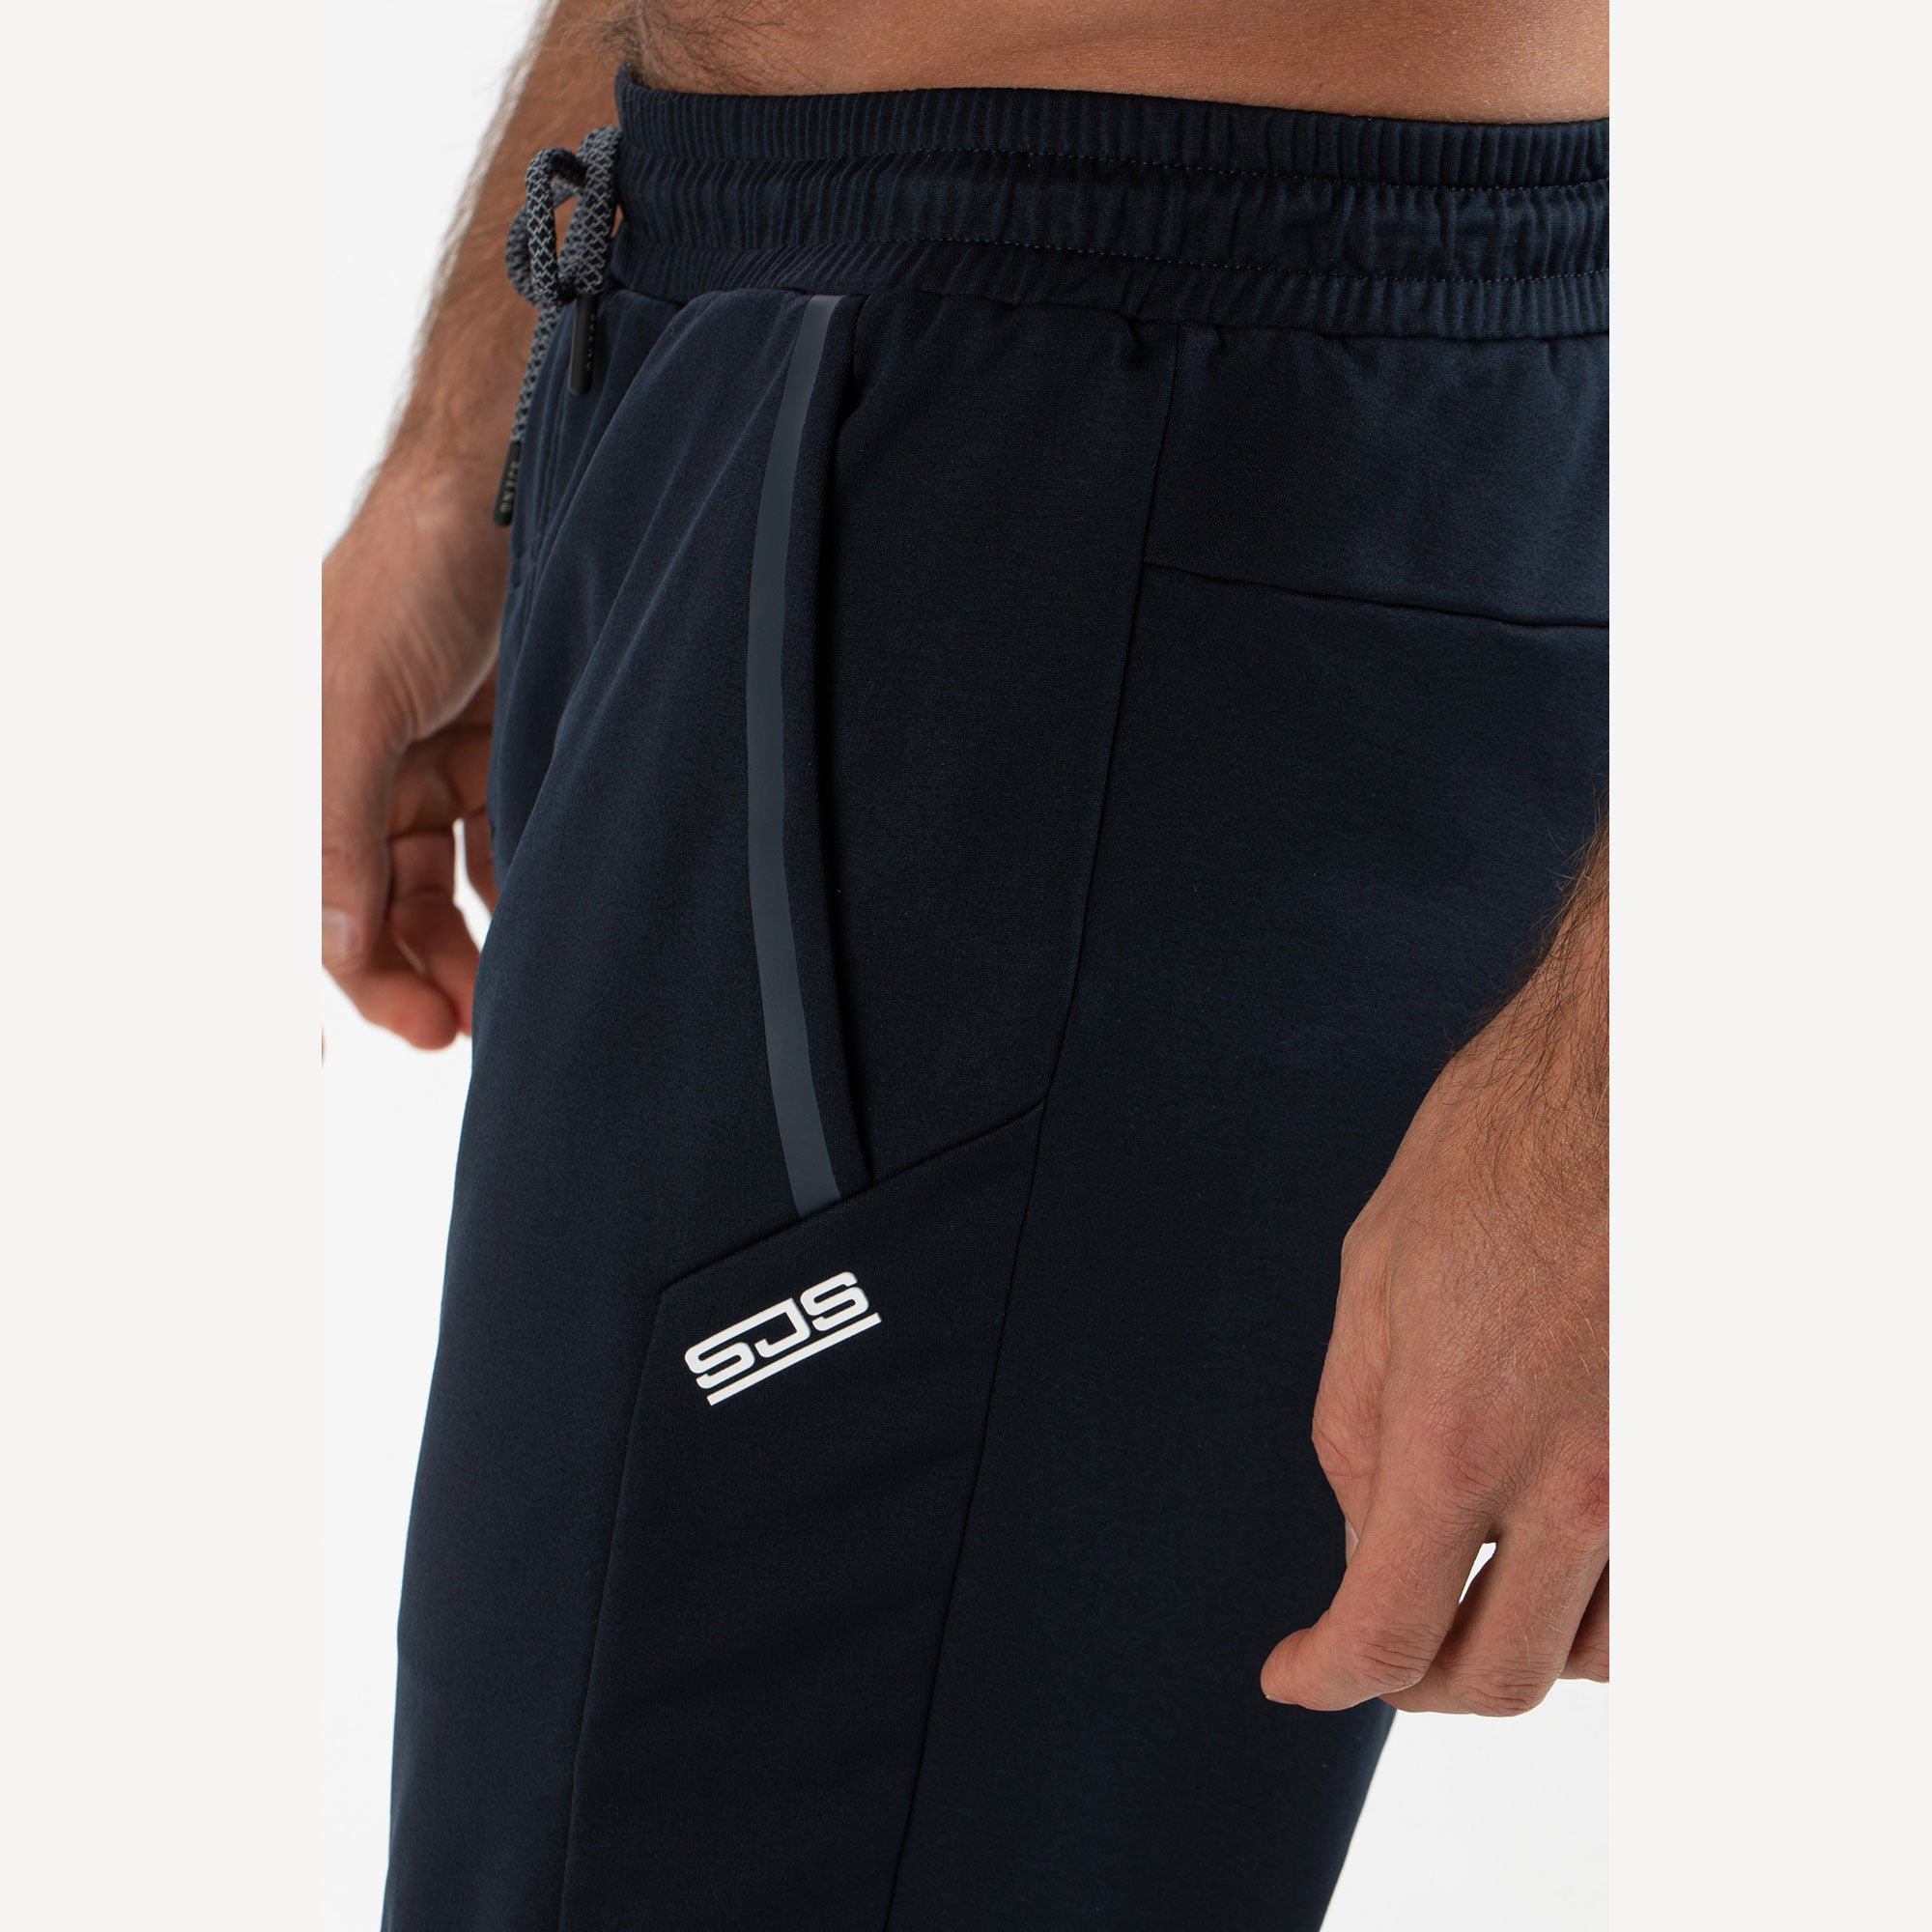 Sjeng Sports Elias Men's Tennis Pants - Dark Blue